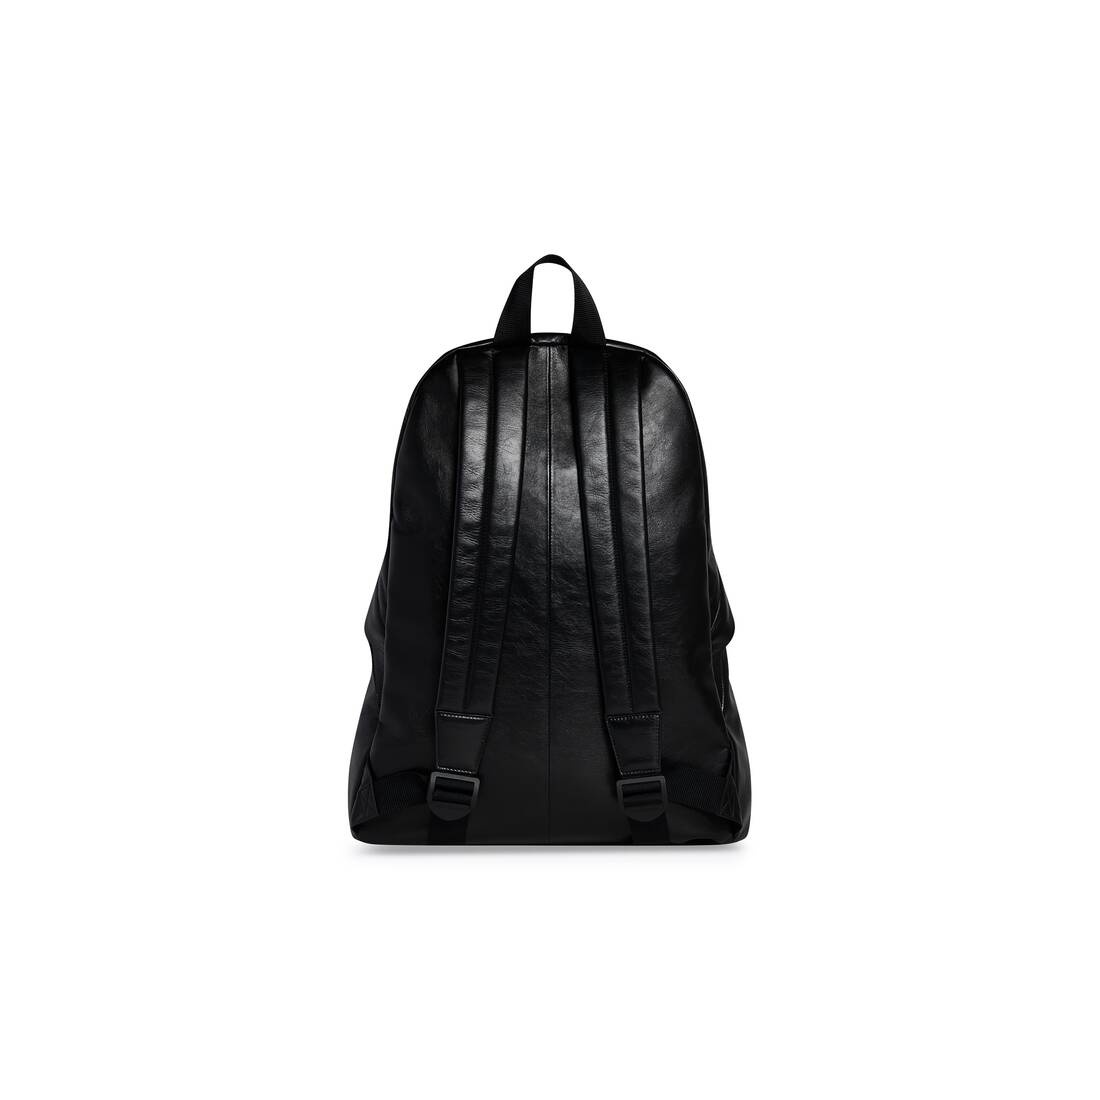 Men's Premium Xxl Backpack in Black - 5